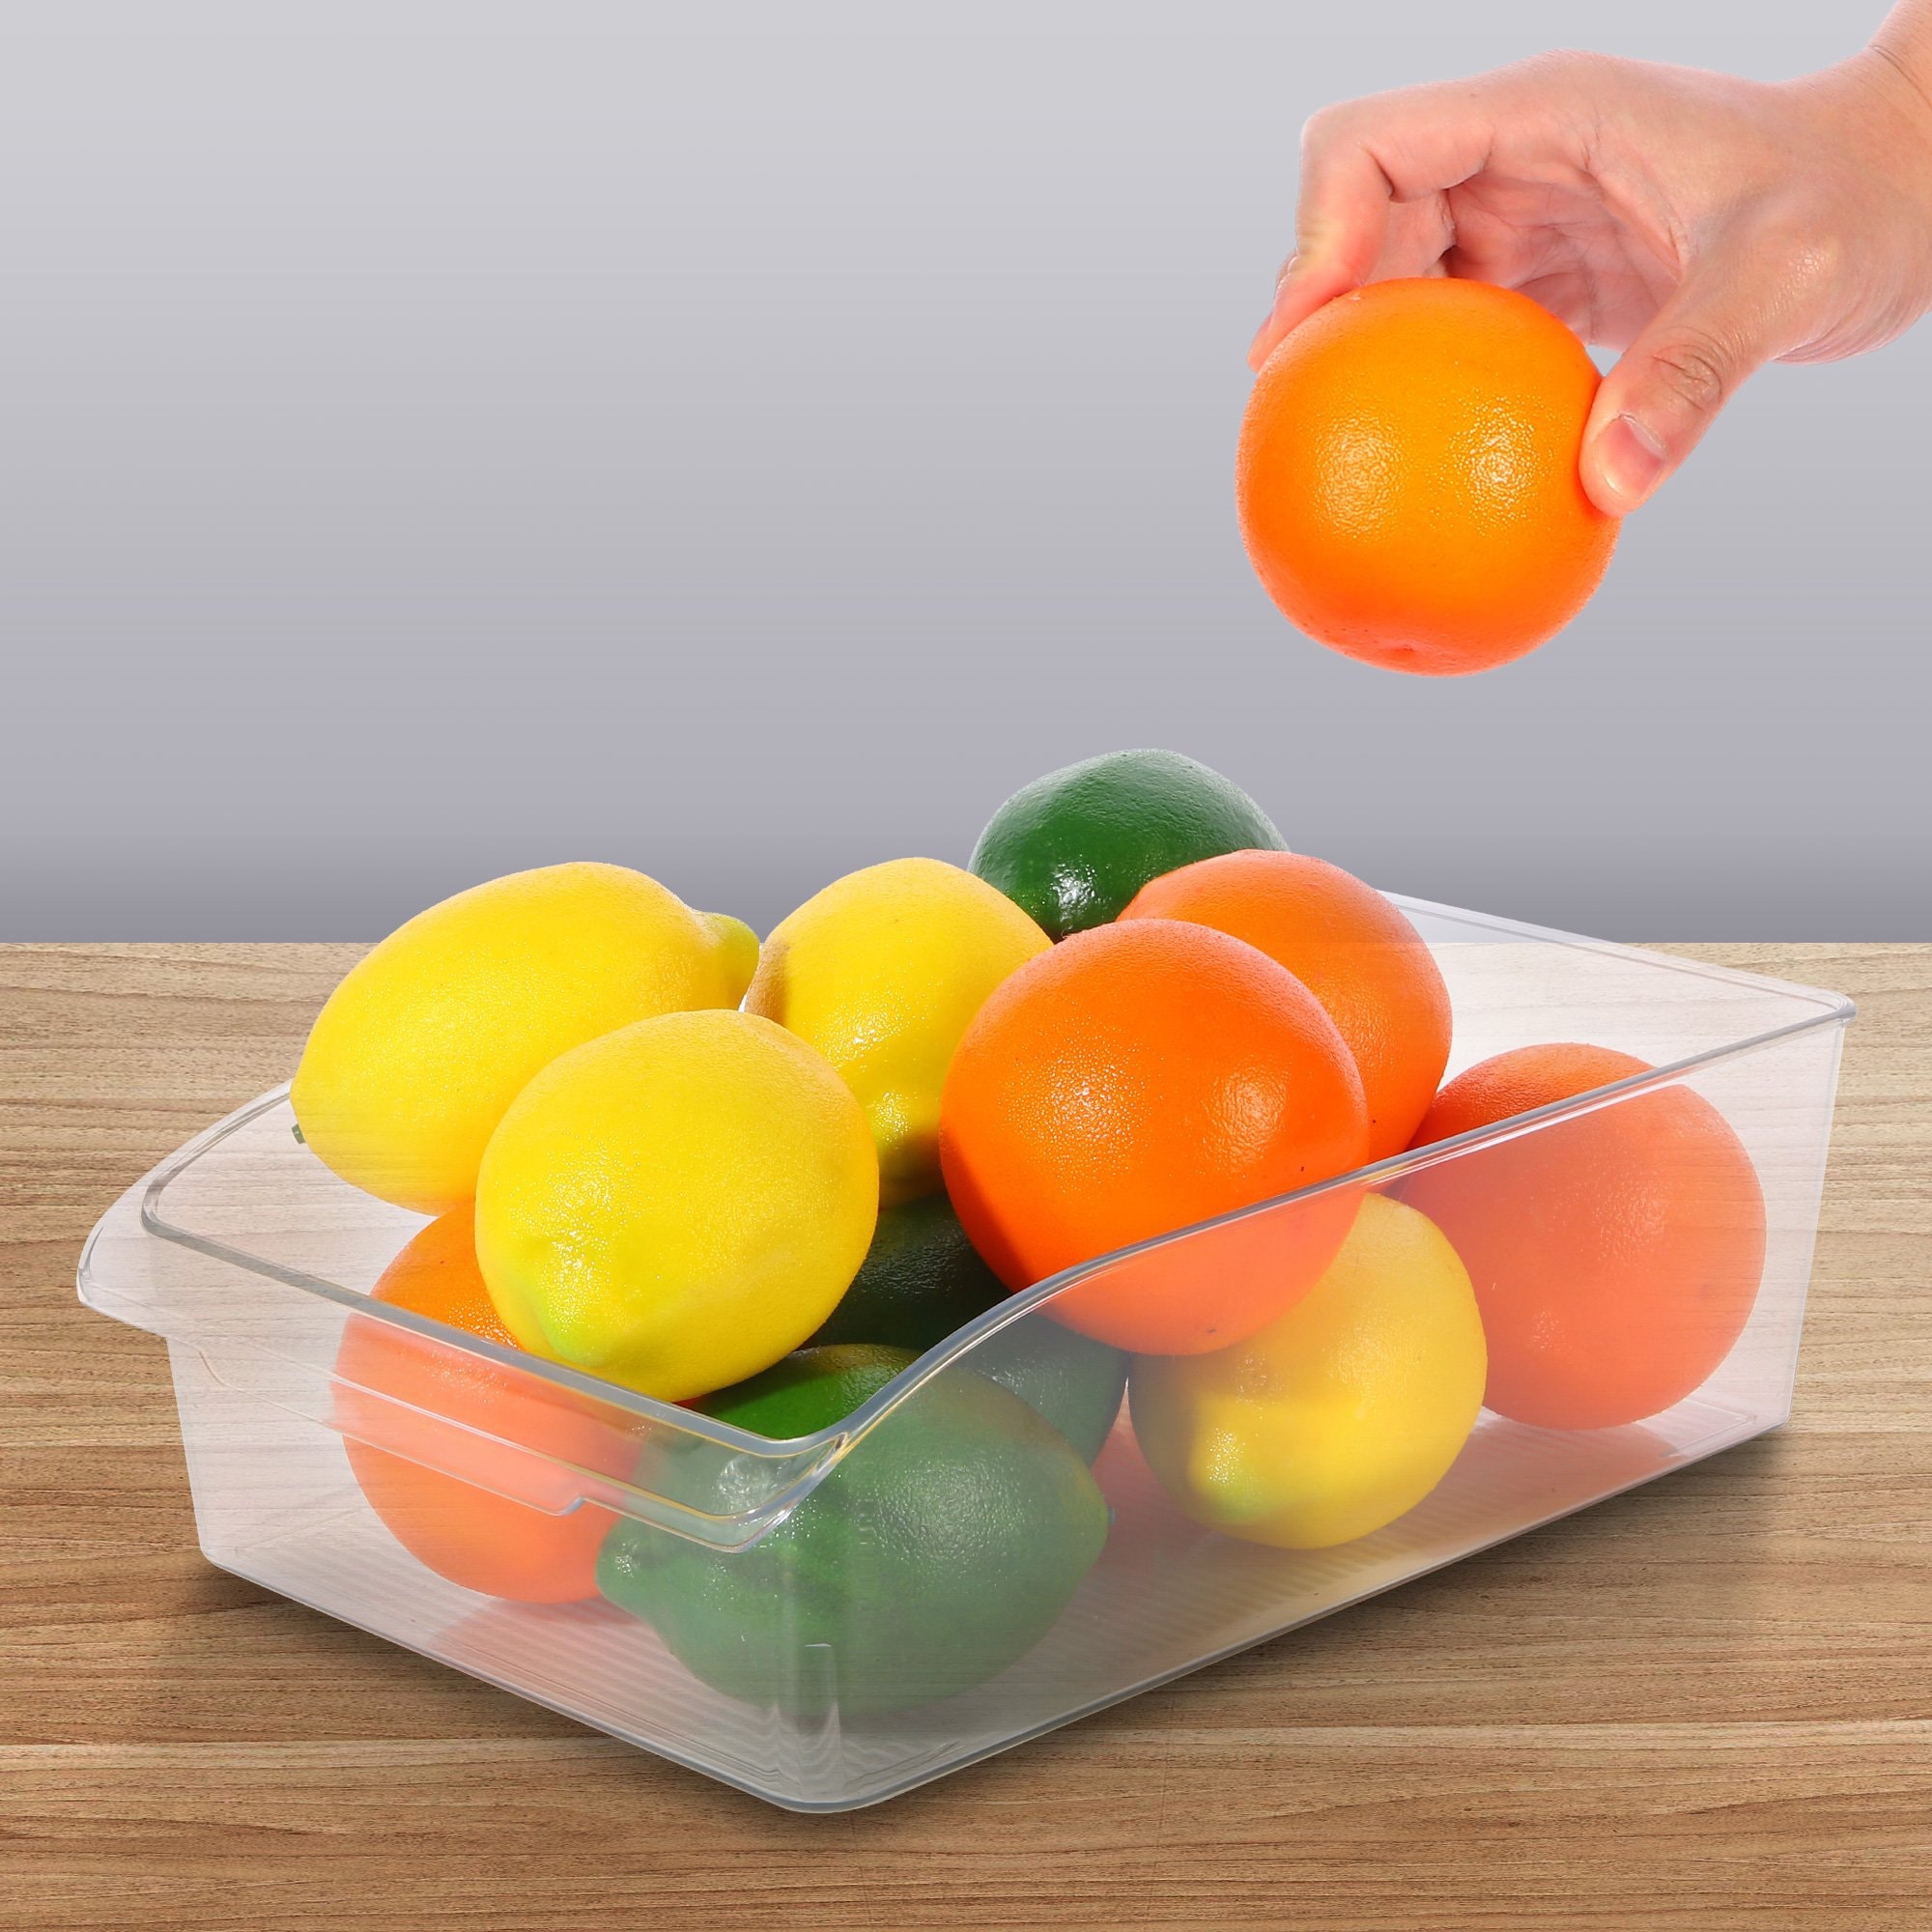 ROSELIFE 饮品蔬菜水果分类厨房冰箱收纳盒 12.2"x8.0"x3.6"